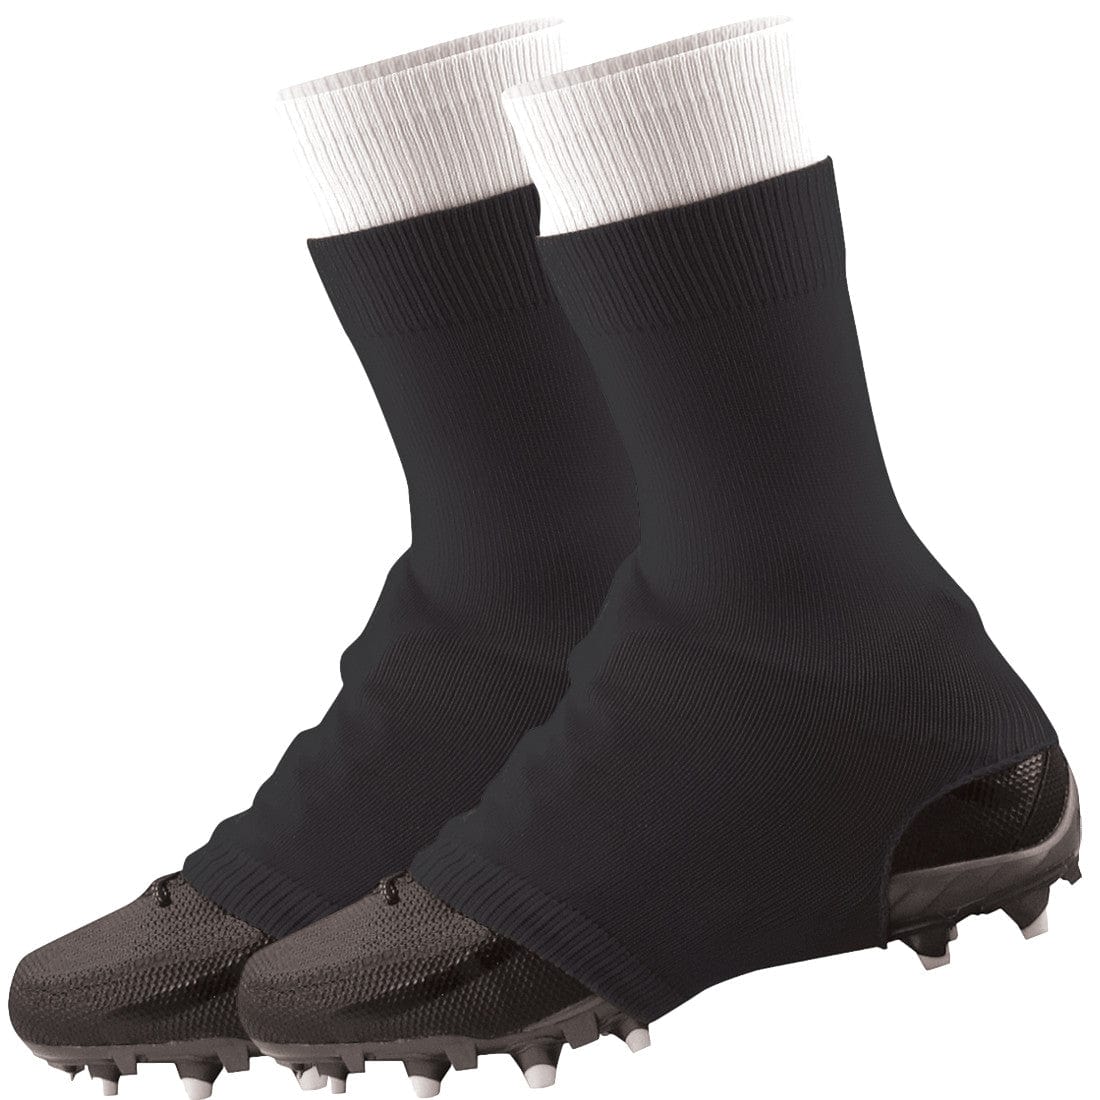 Gridiron Gladiator Cleat Covers - Football Spats - Football Cleat Socks -  Cleat Spats for Soccer, Baseball & Softball Camo2 Small